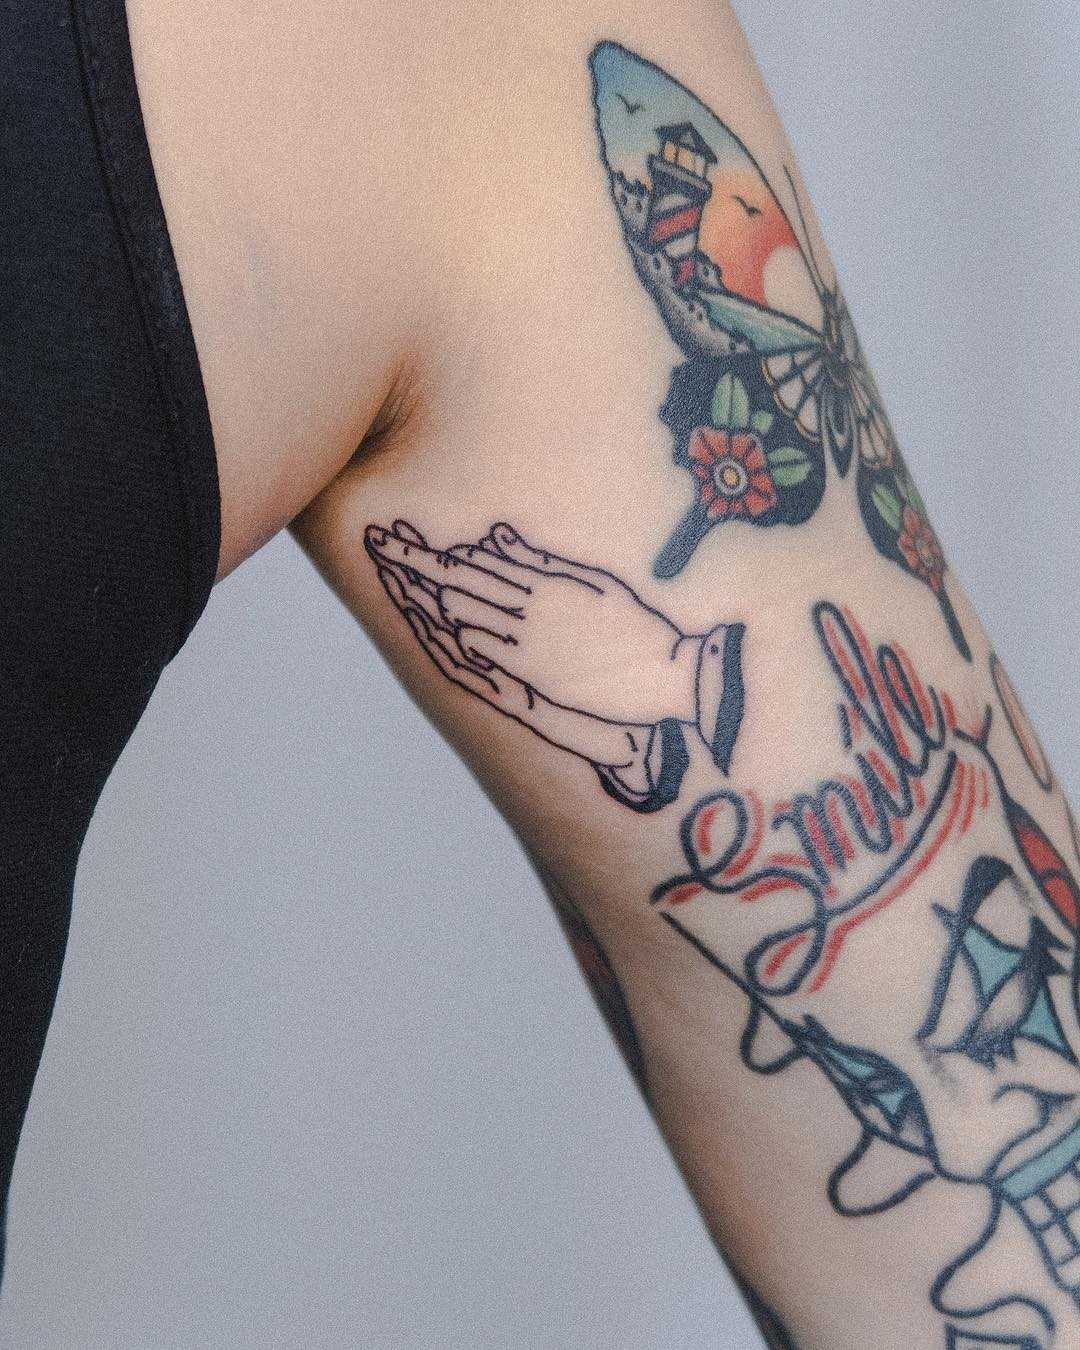 Praying hands by tattooist Bongkee